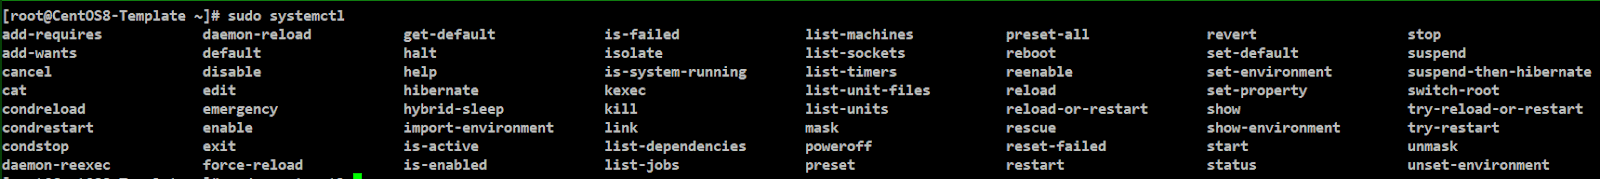 [LINUX] CentOS 8에서 리눅스 명령어 자동 완성 설정하기